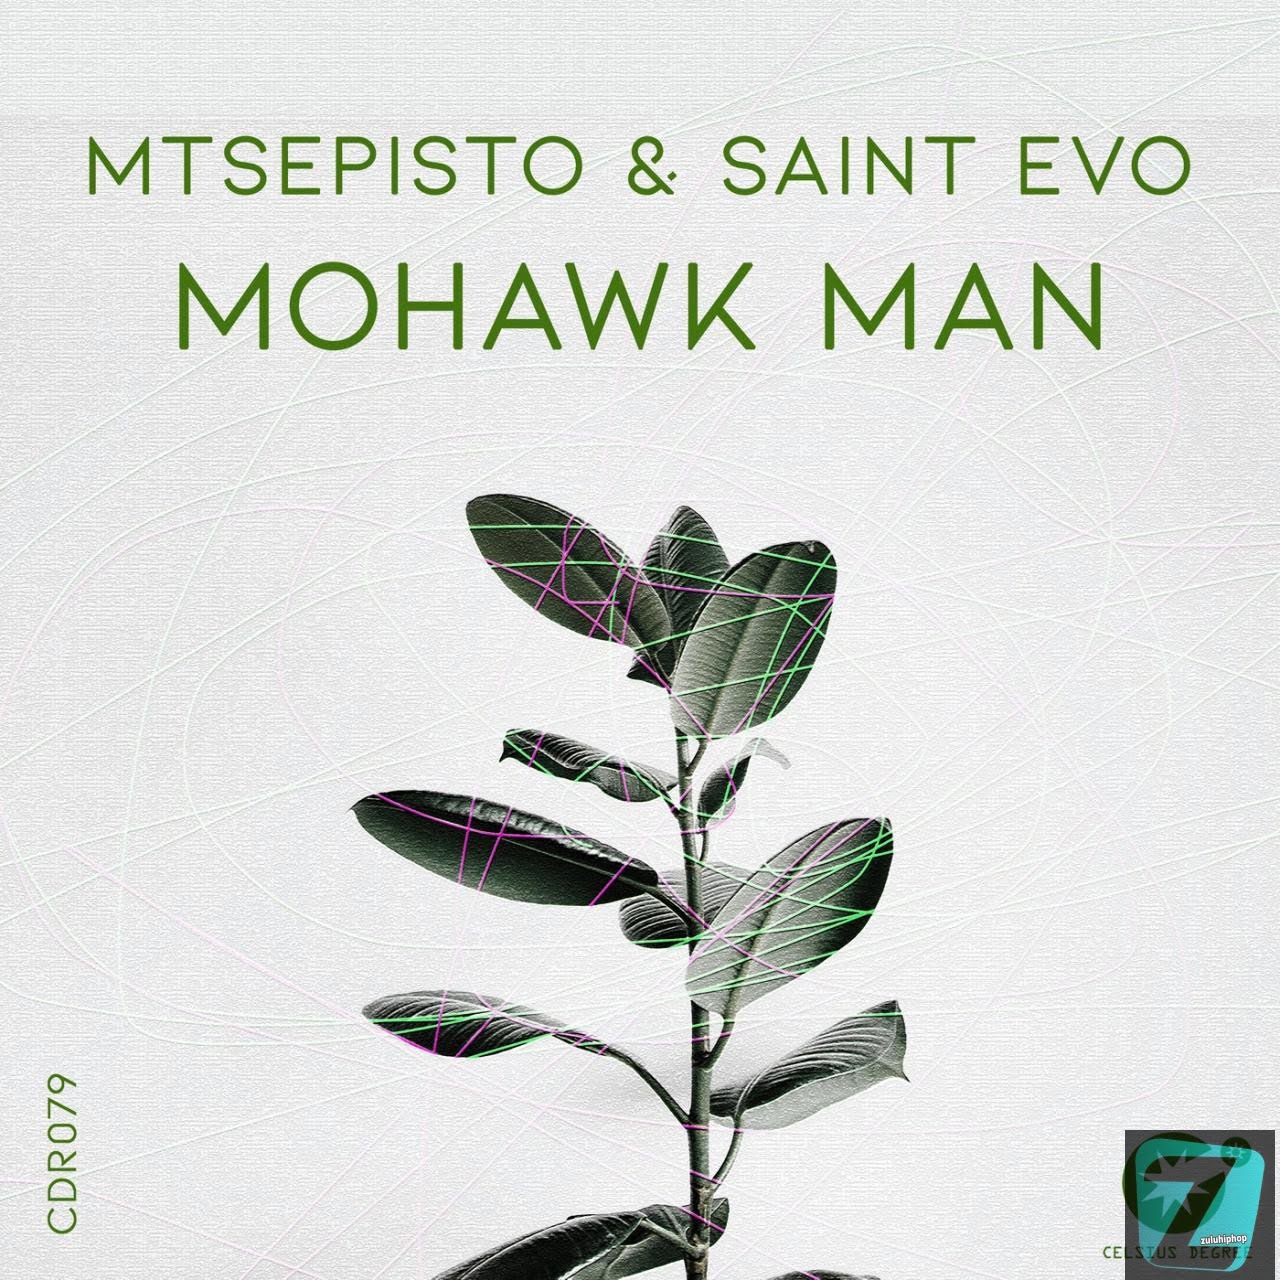 Mtsepisto & Saint Evo – Mohawk Man (Original Mix)